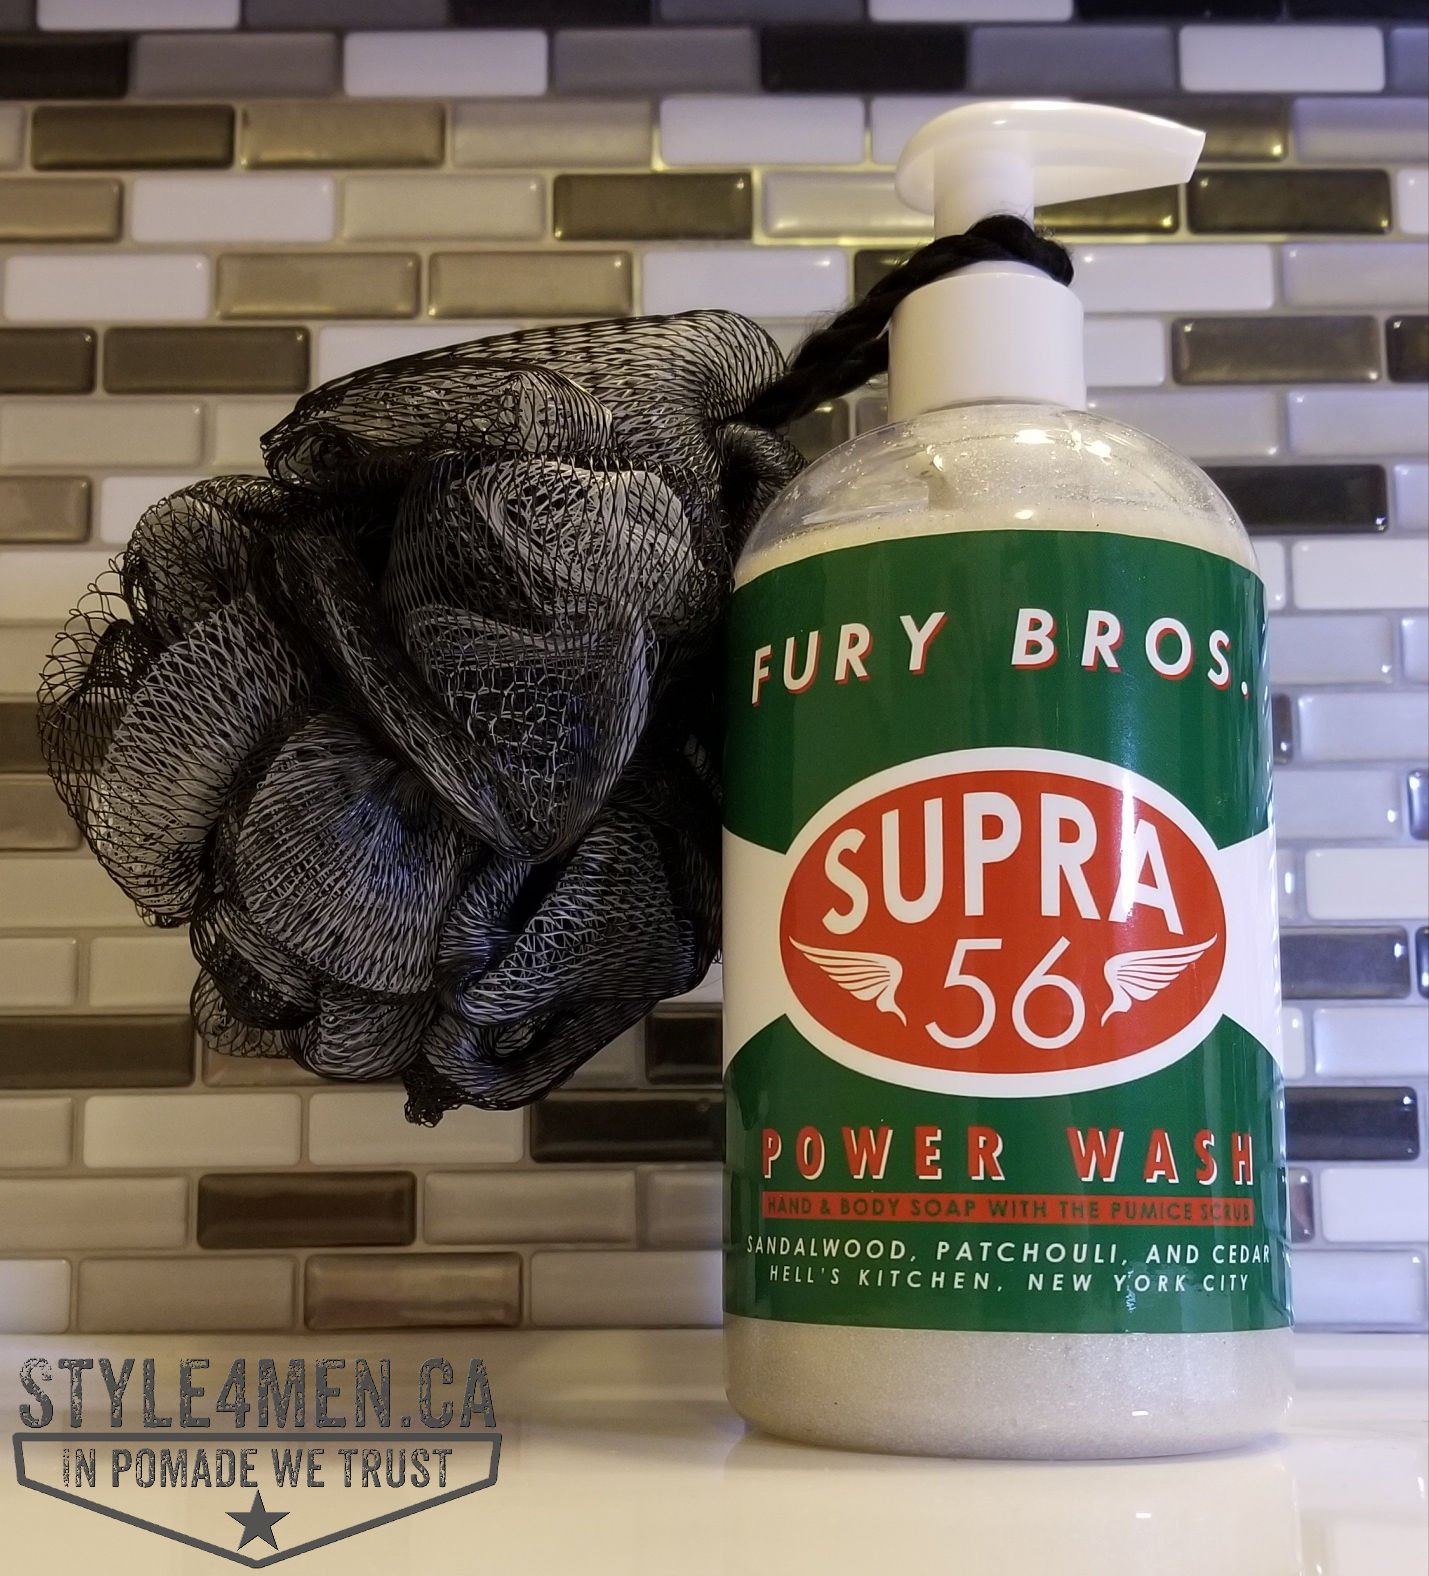 Supra 56 power wash by the Fury Bros.